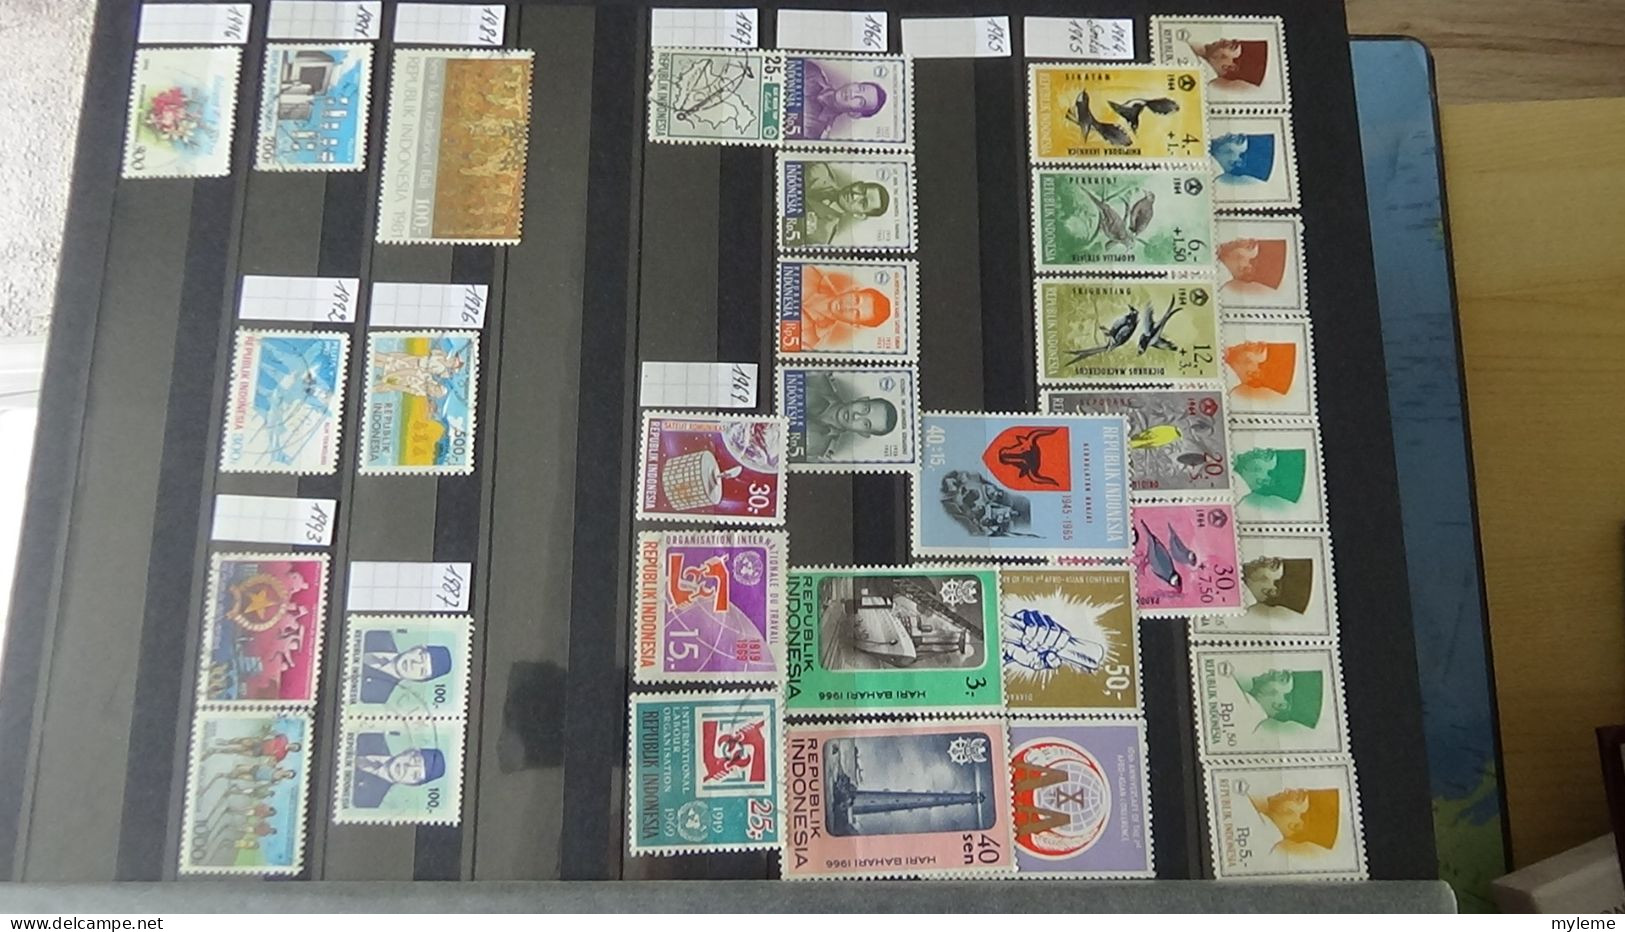 BG2 Ensemble de timbres de divers pays + France PA N° 15 ** Cote 1500 euros. A saisir !!!